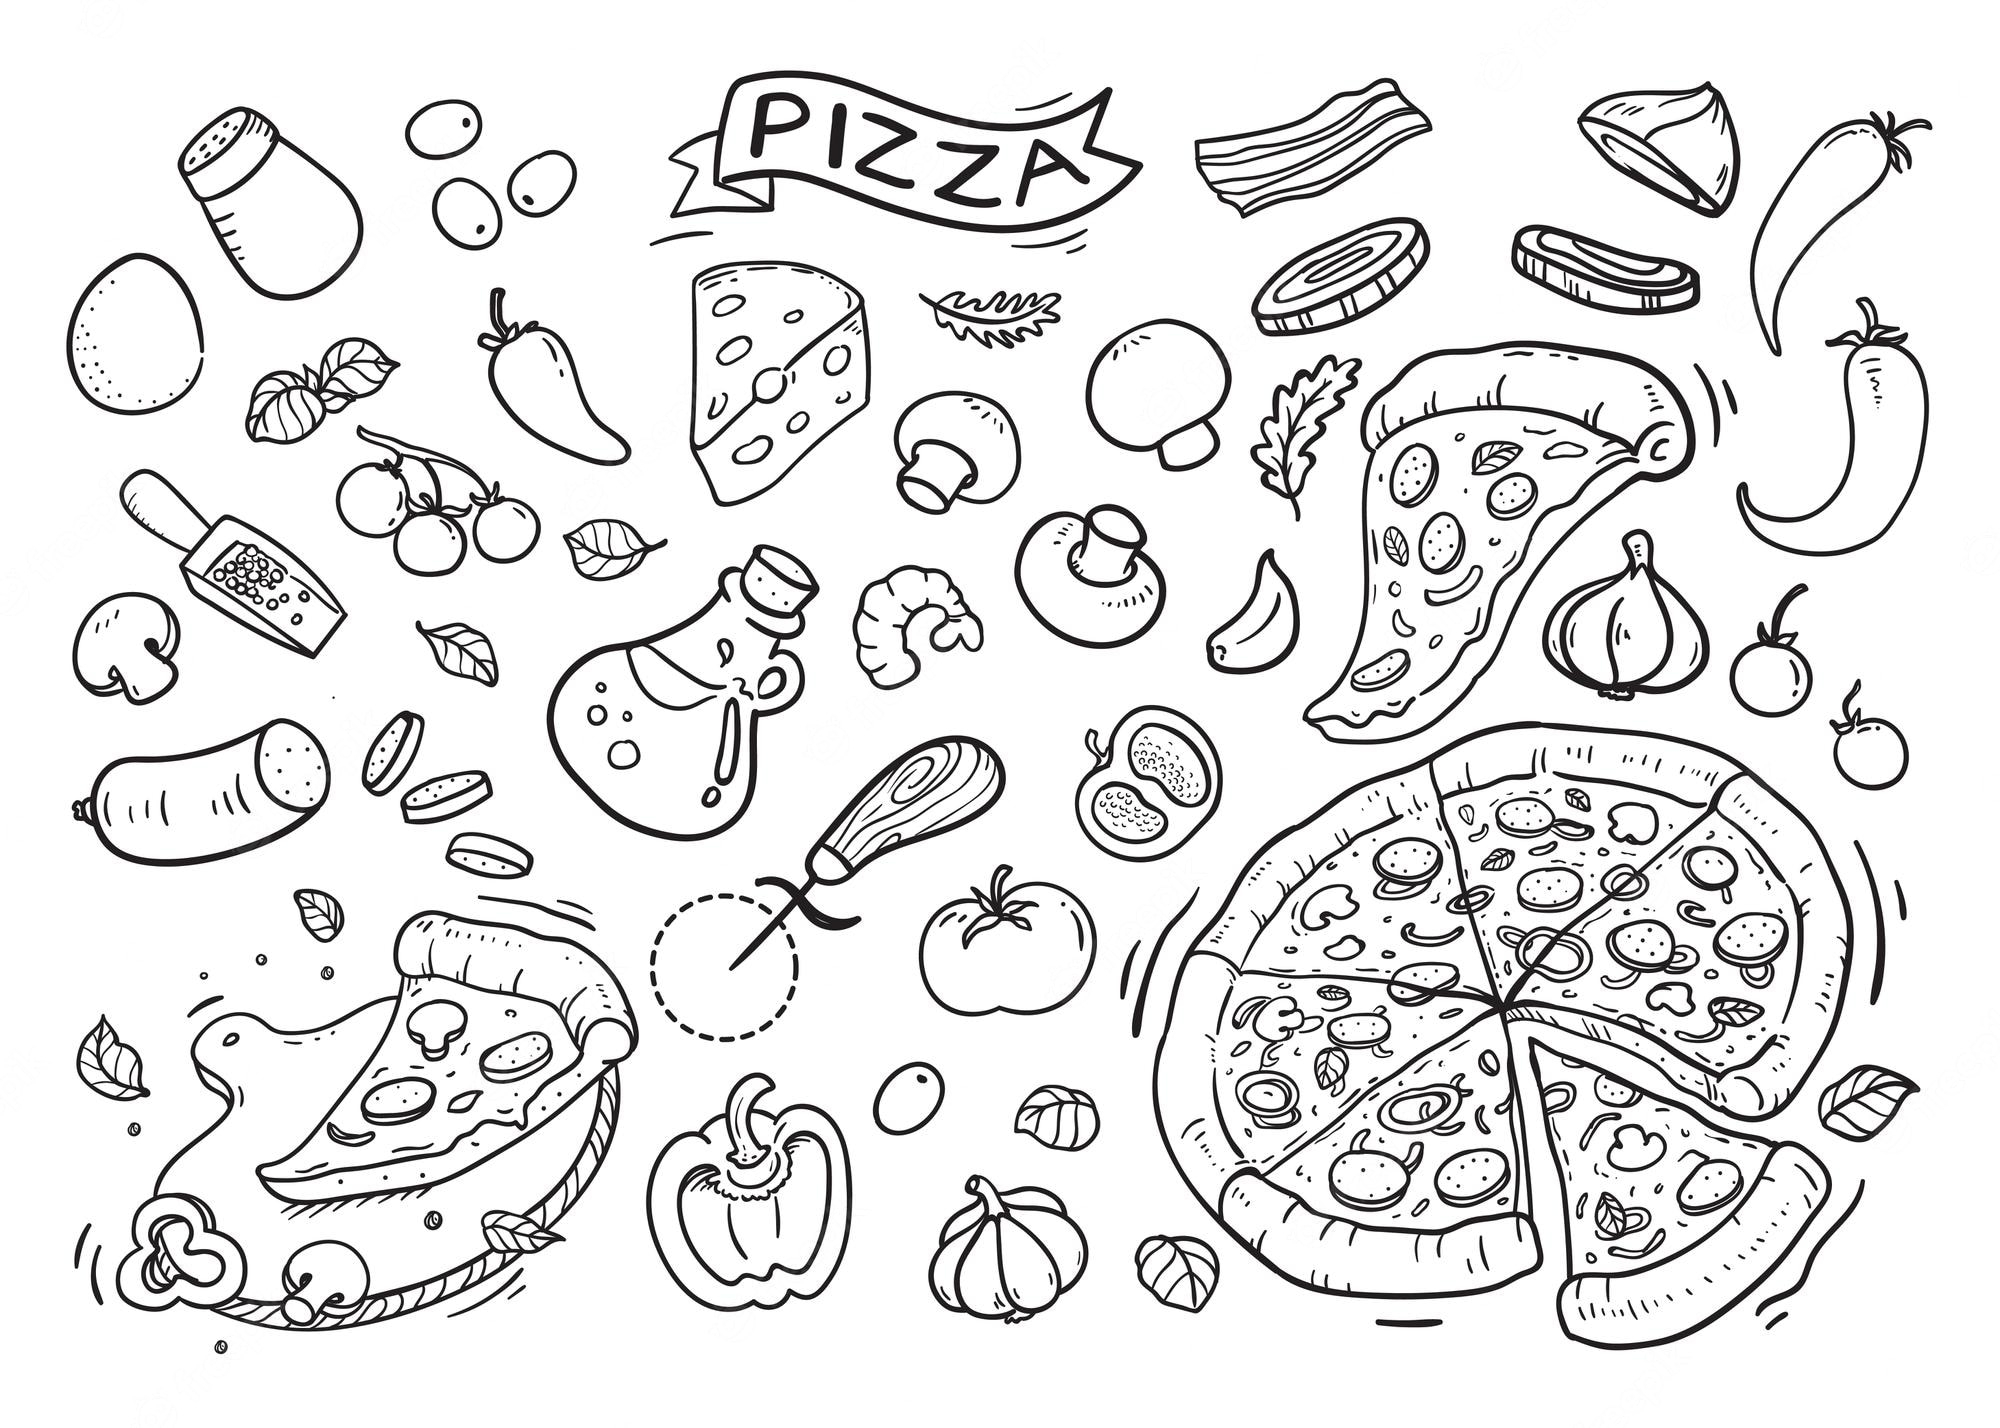 Pizza Ingredients #11